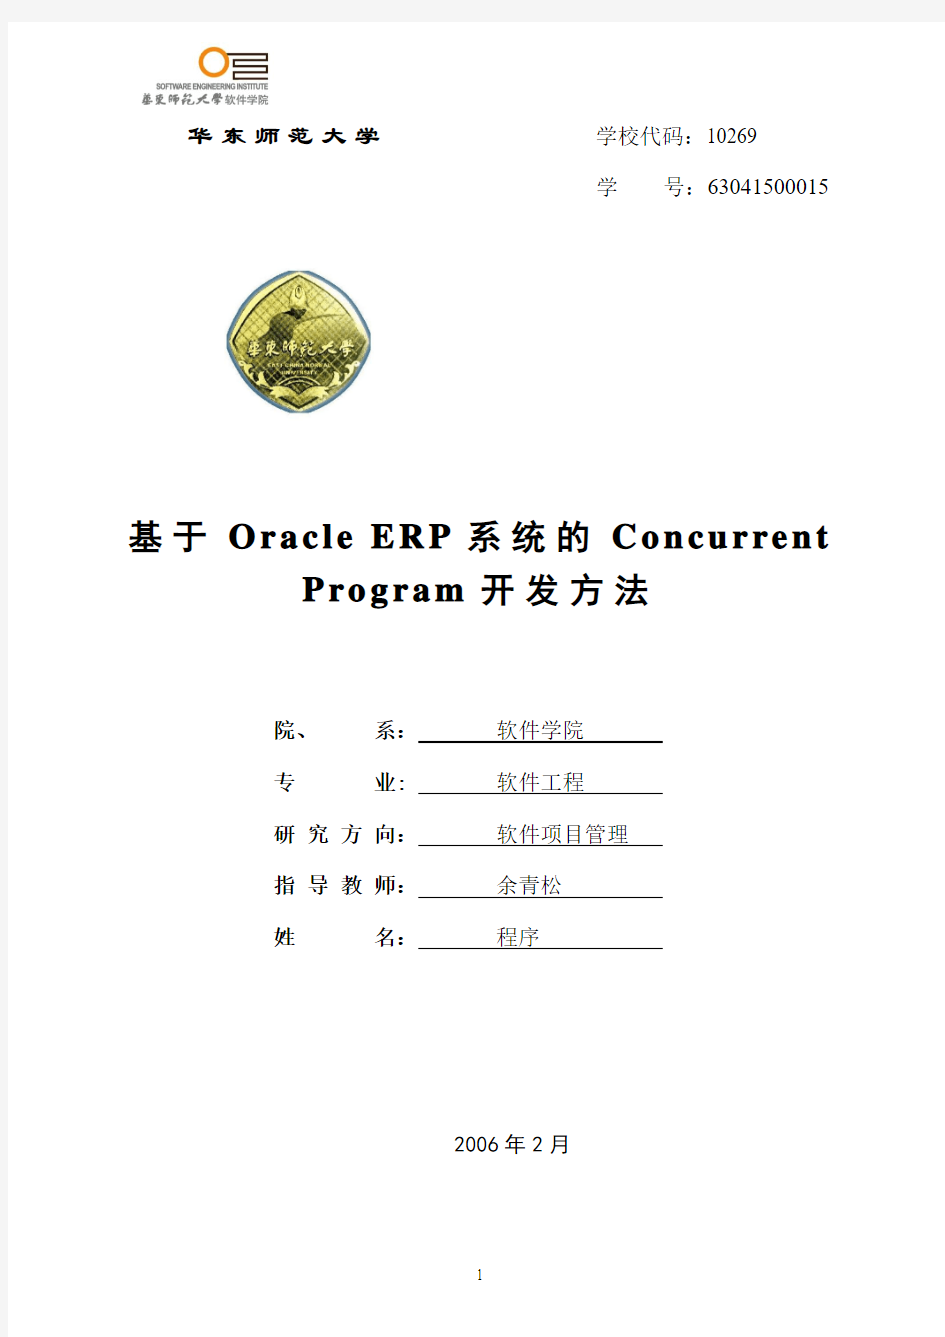 Oracle Concurrent Program Basic Development